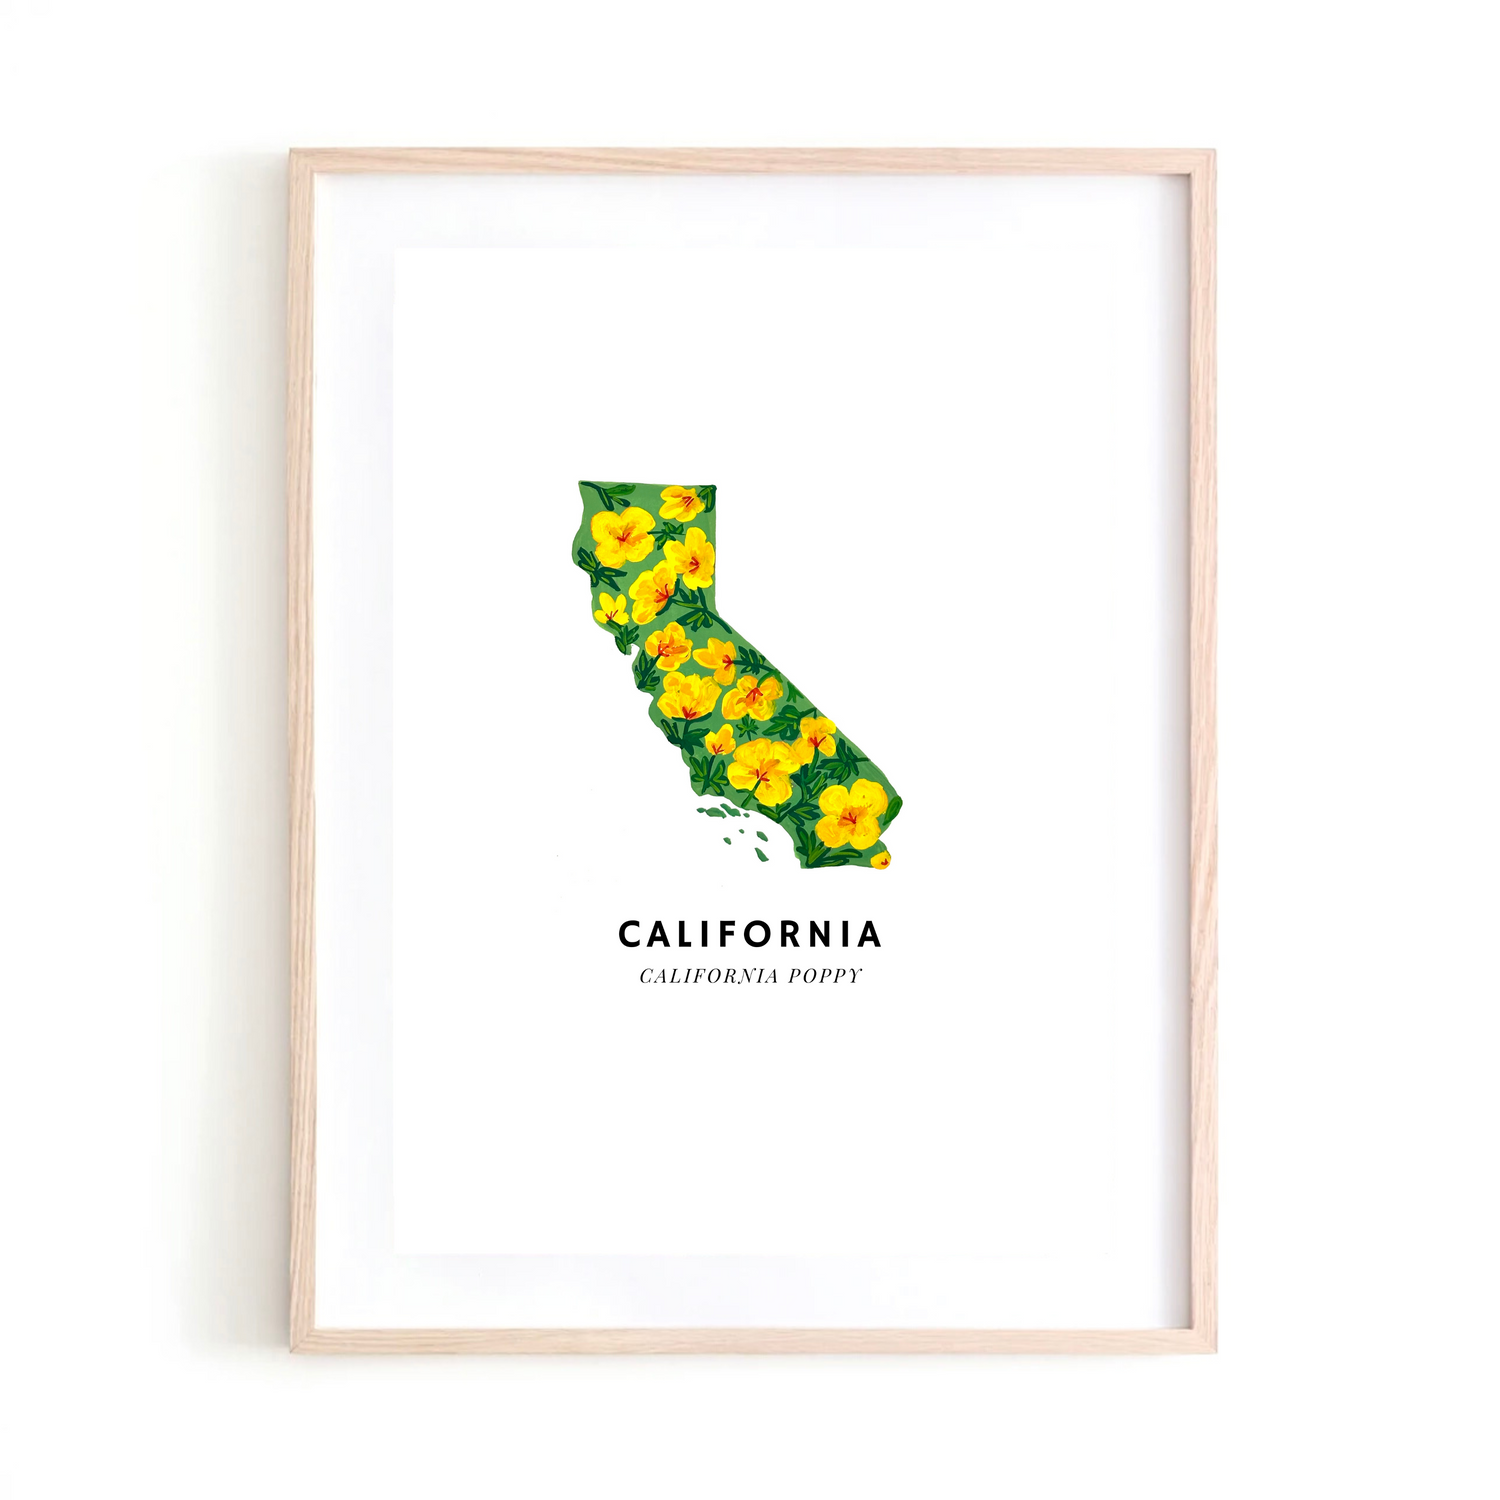 California State Flower art print